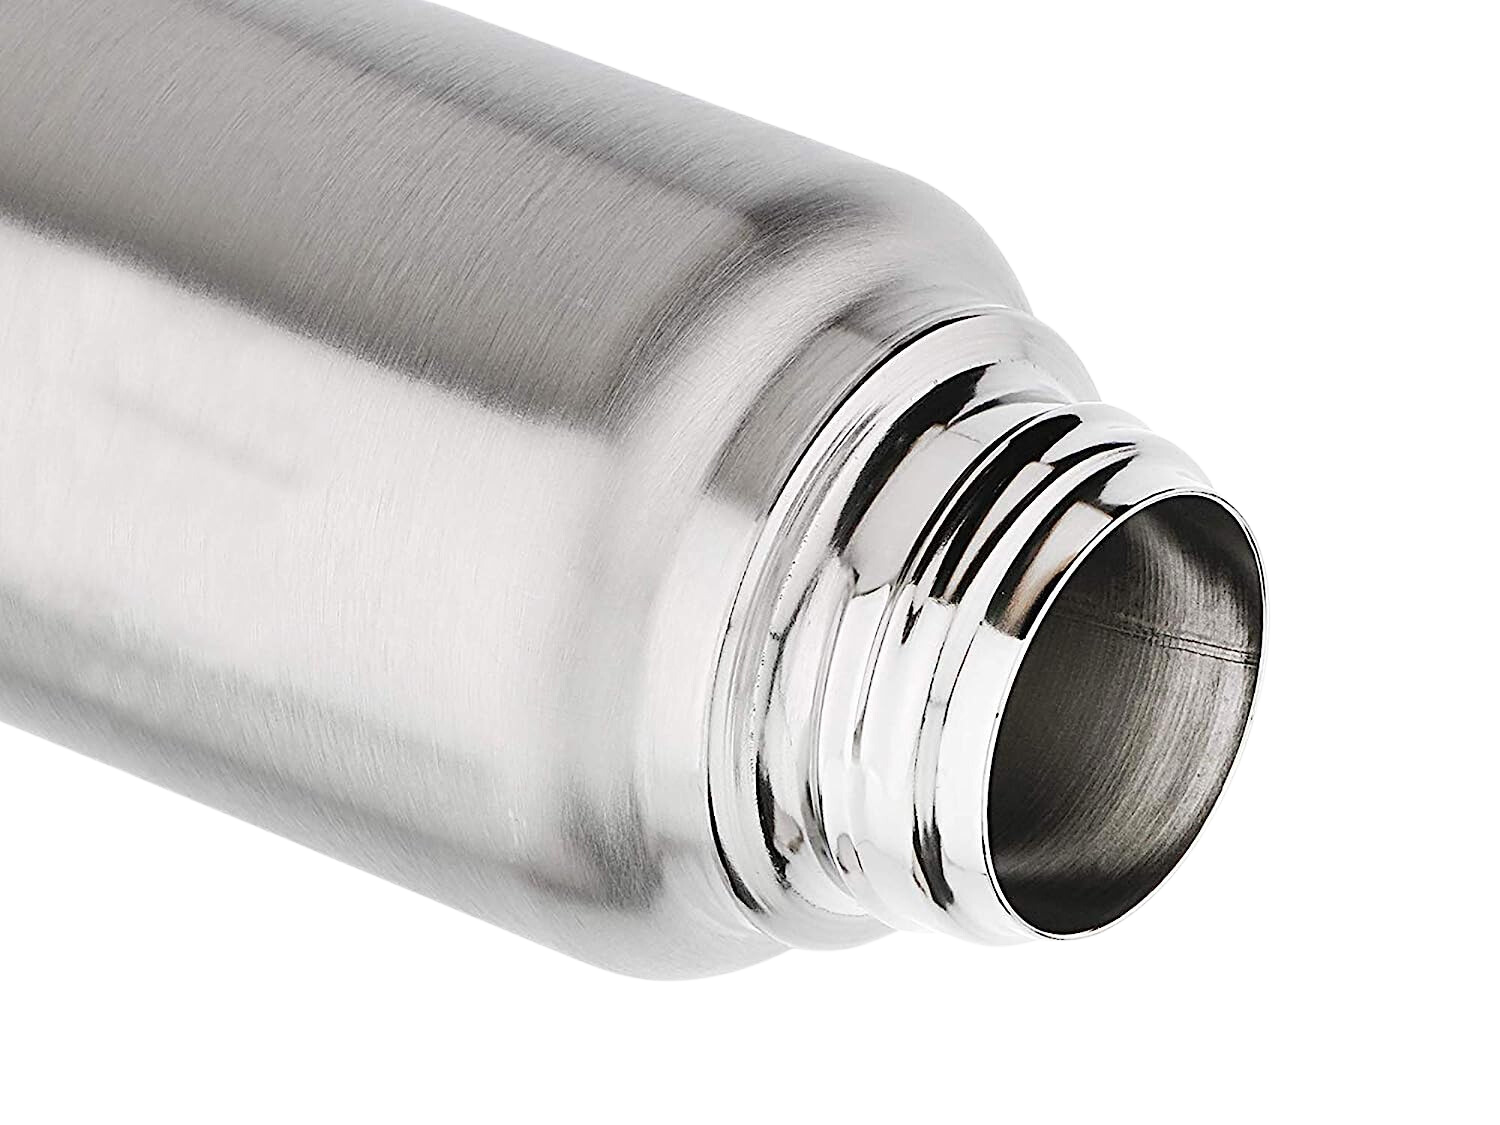 Buy MILTON Cylindrical Metallic Duo Thermo Flask - 1000ml